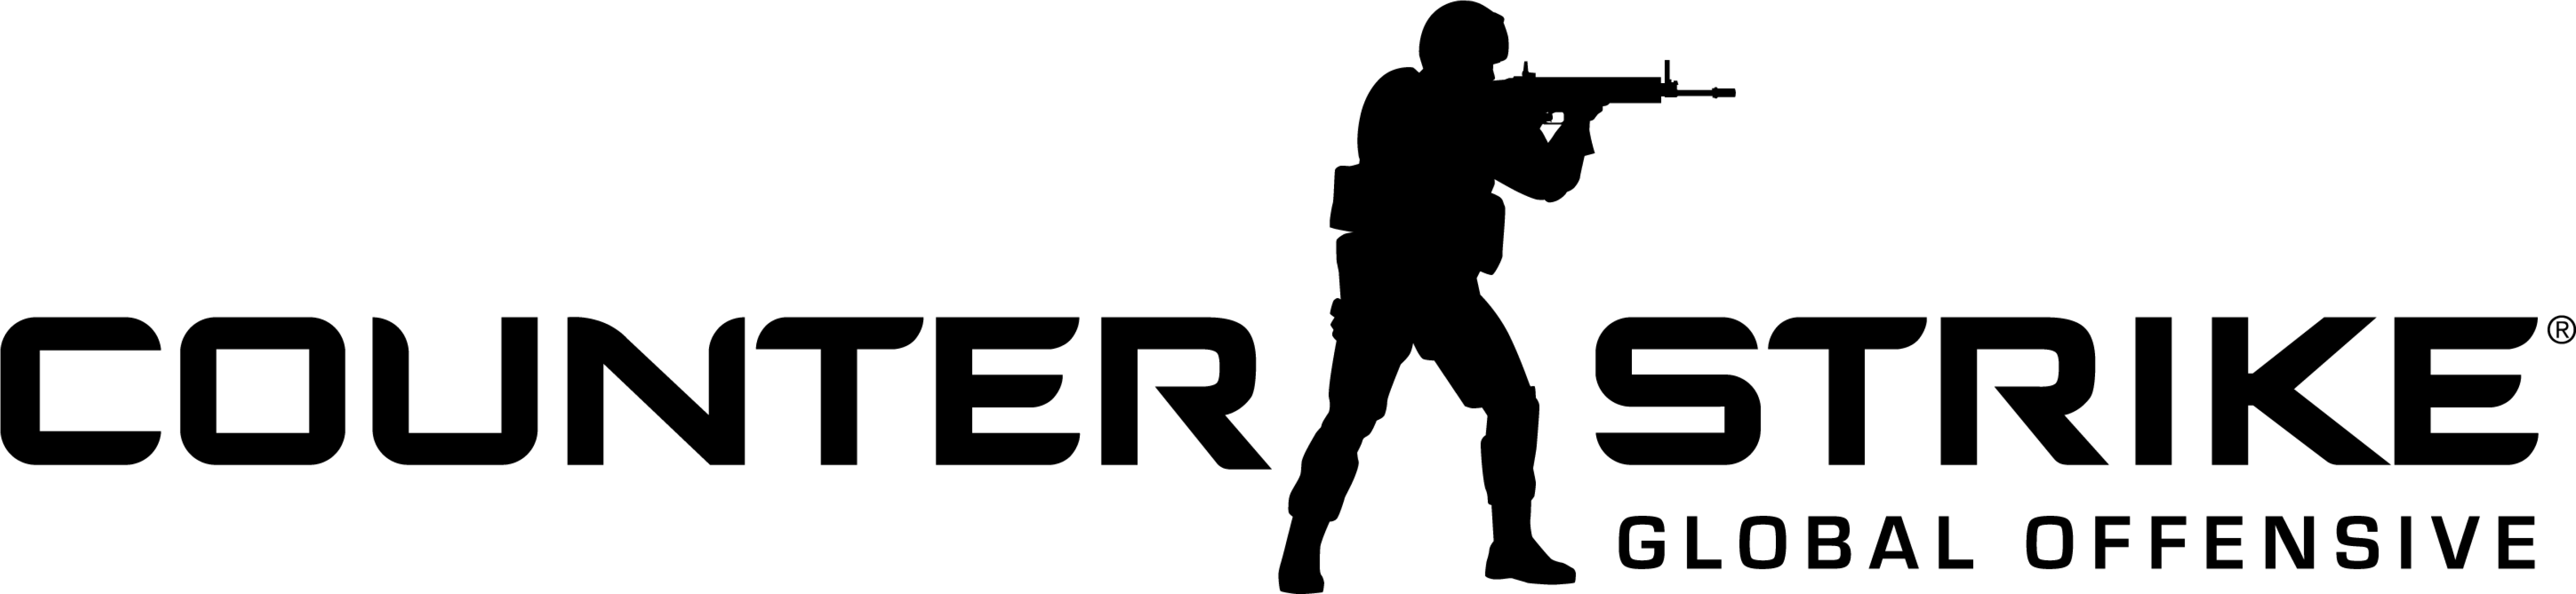 Counter-strike Logo, Emblem, Symbol - Cs Go Logo Png (5300x1280), Png Download